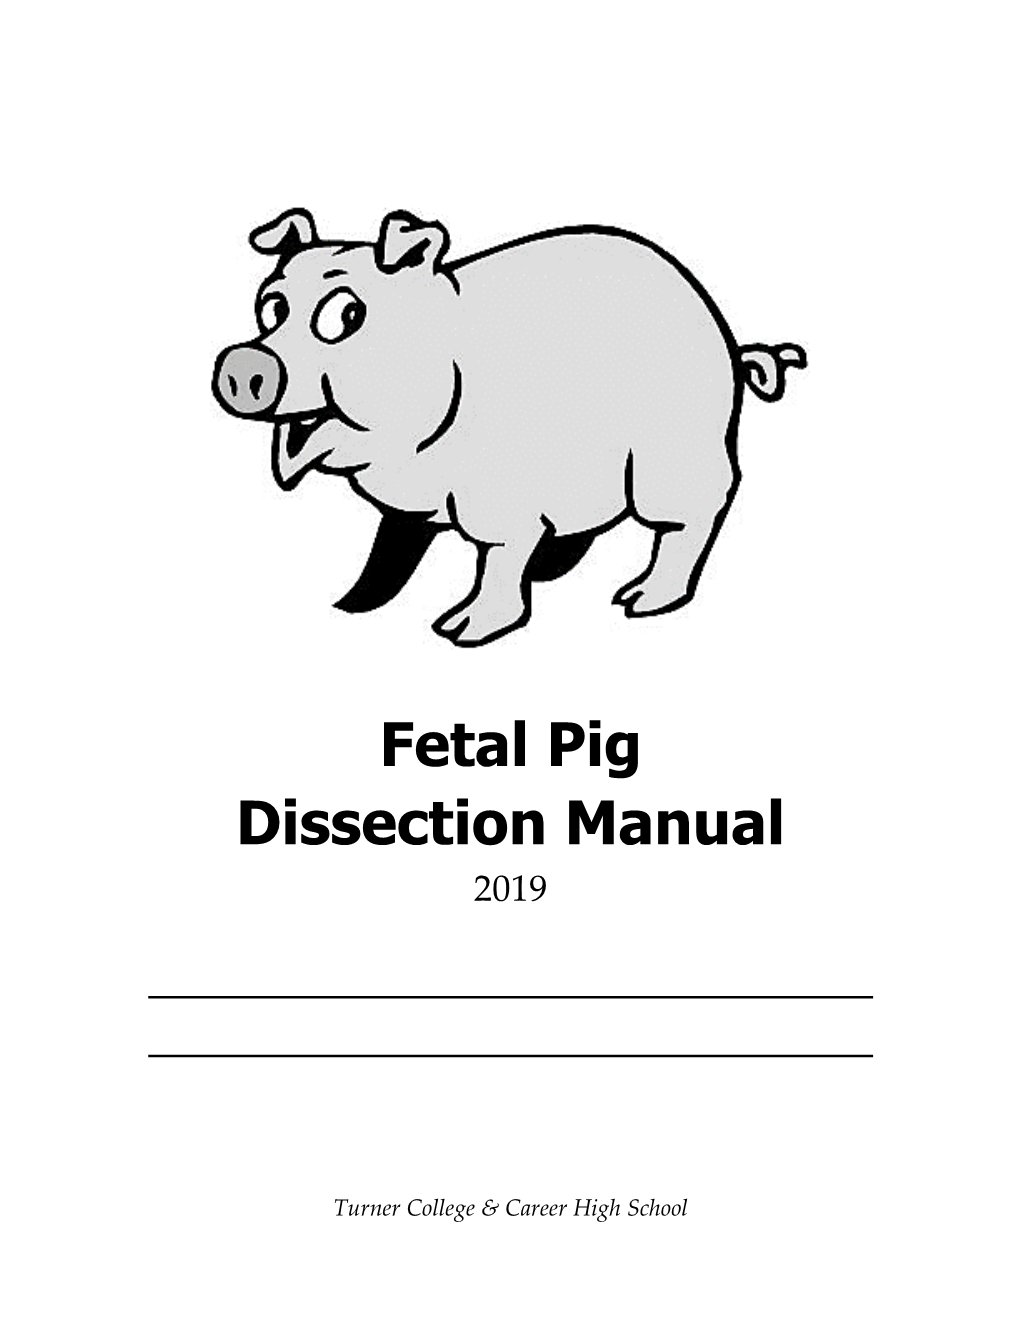 Fetal Pig Dissection Manual 2019